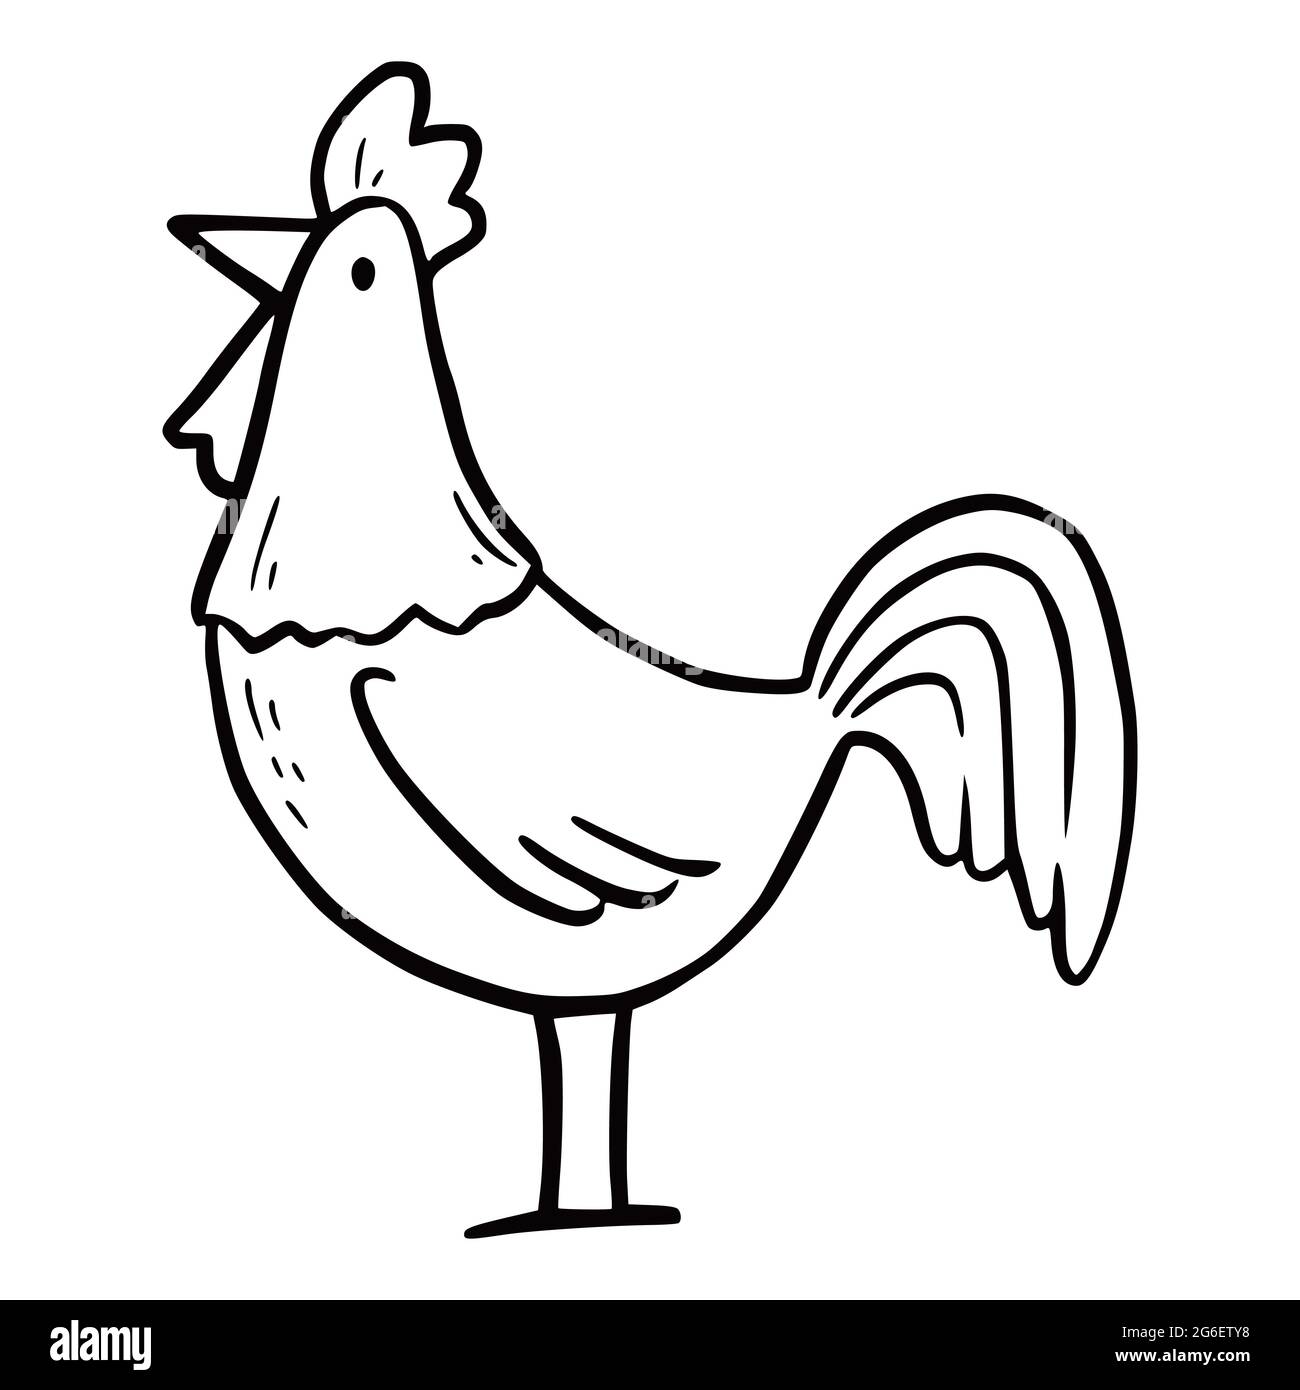 Chicken Drawing Images  Free Download on Freepik